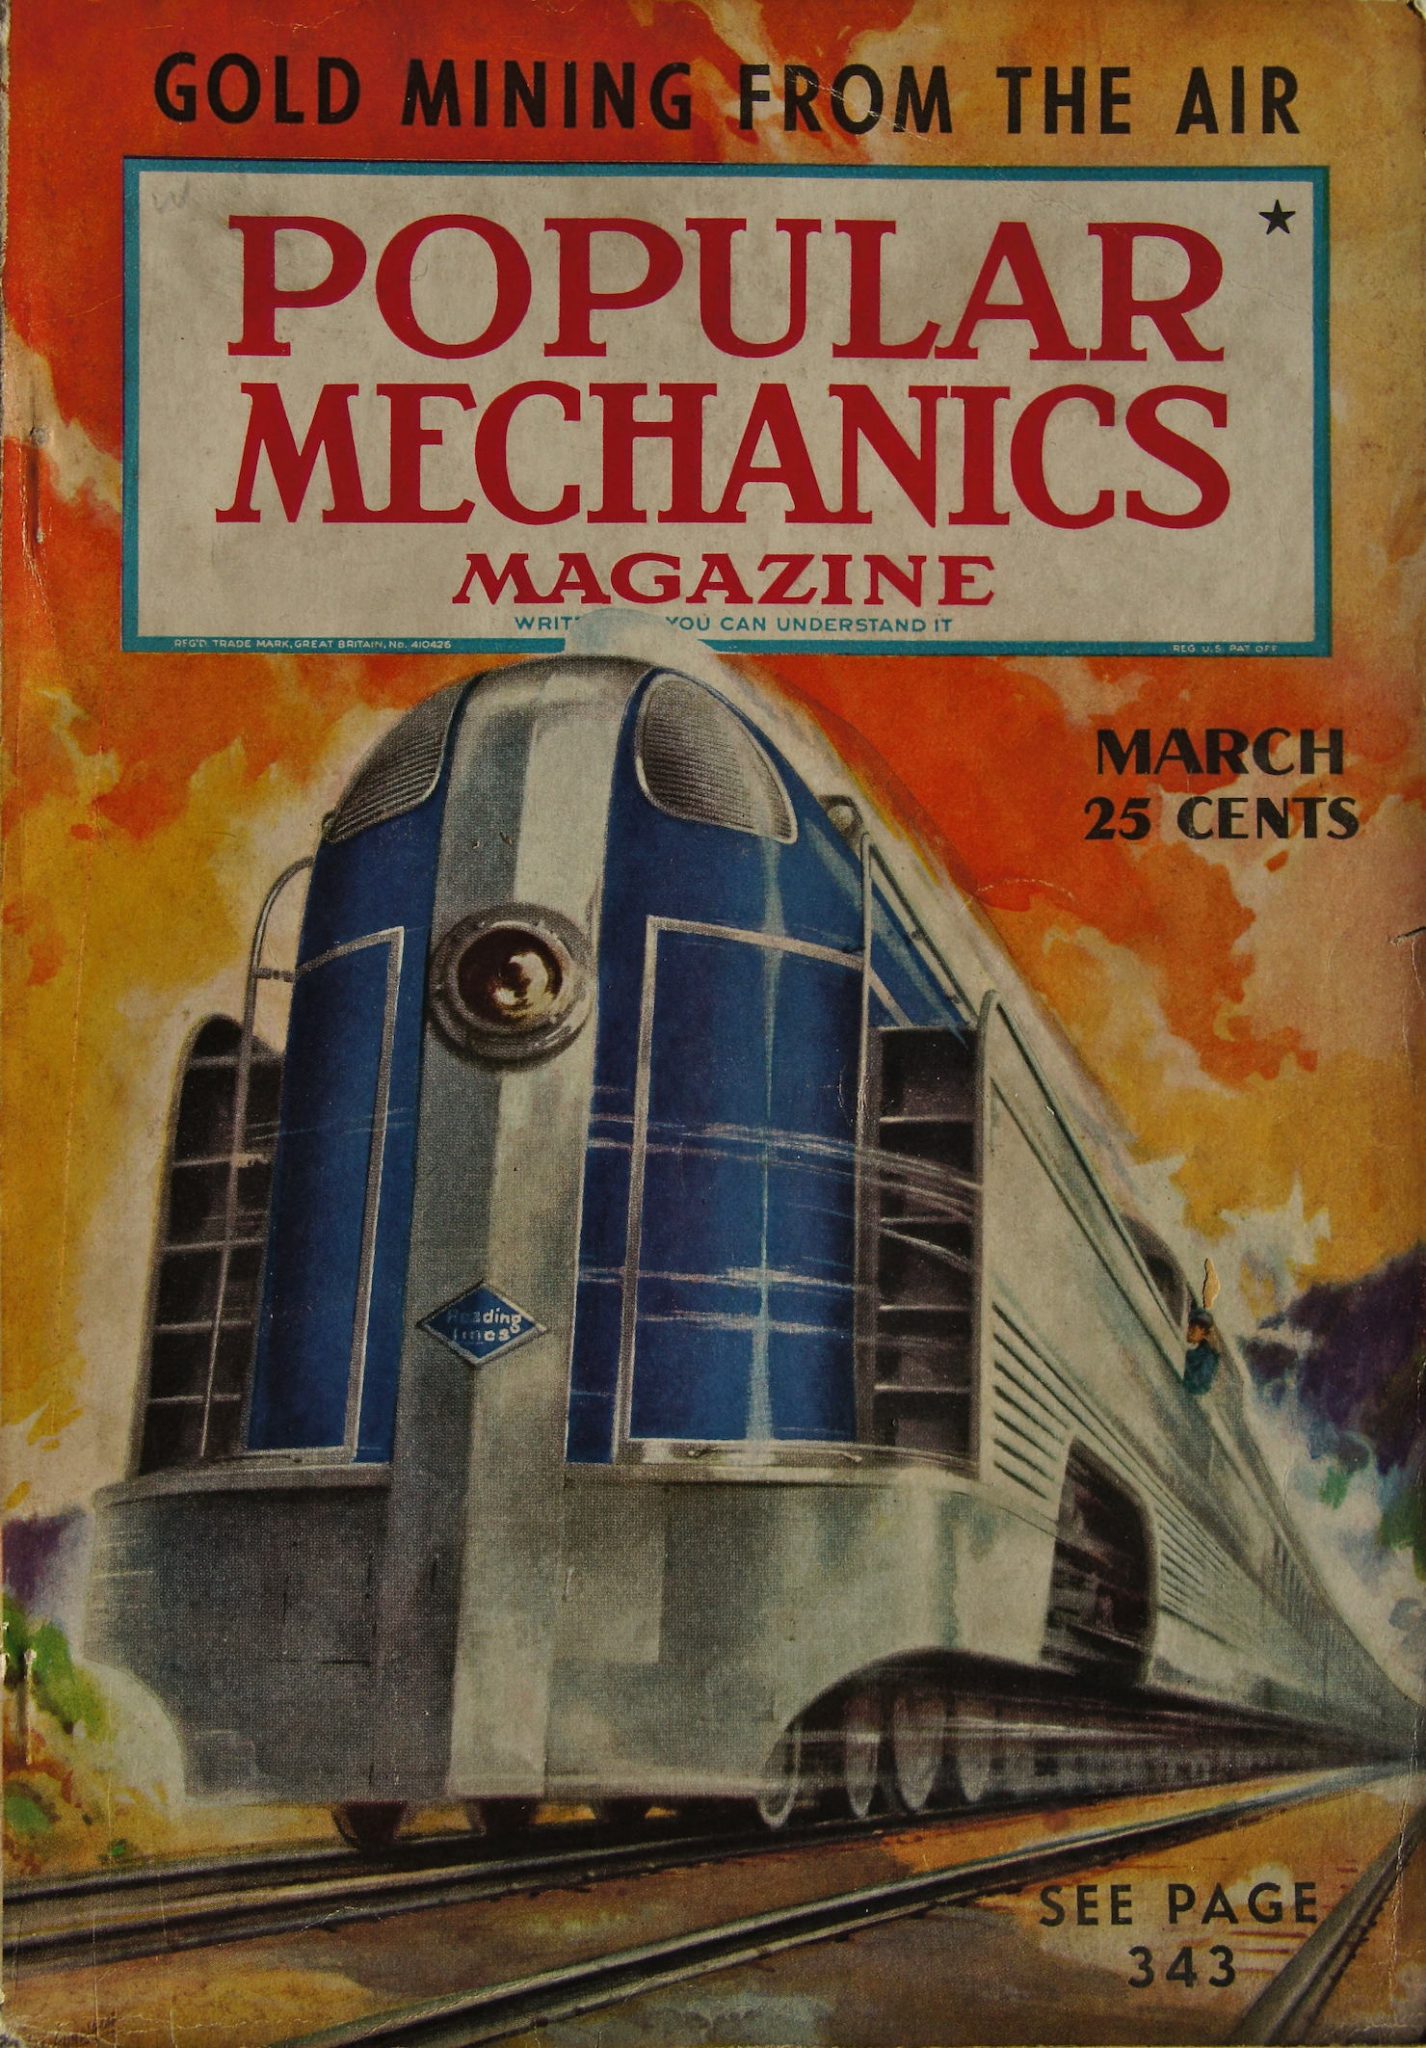 Popular Mechanics - Wikipedia